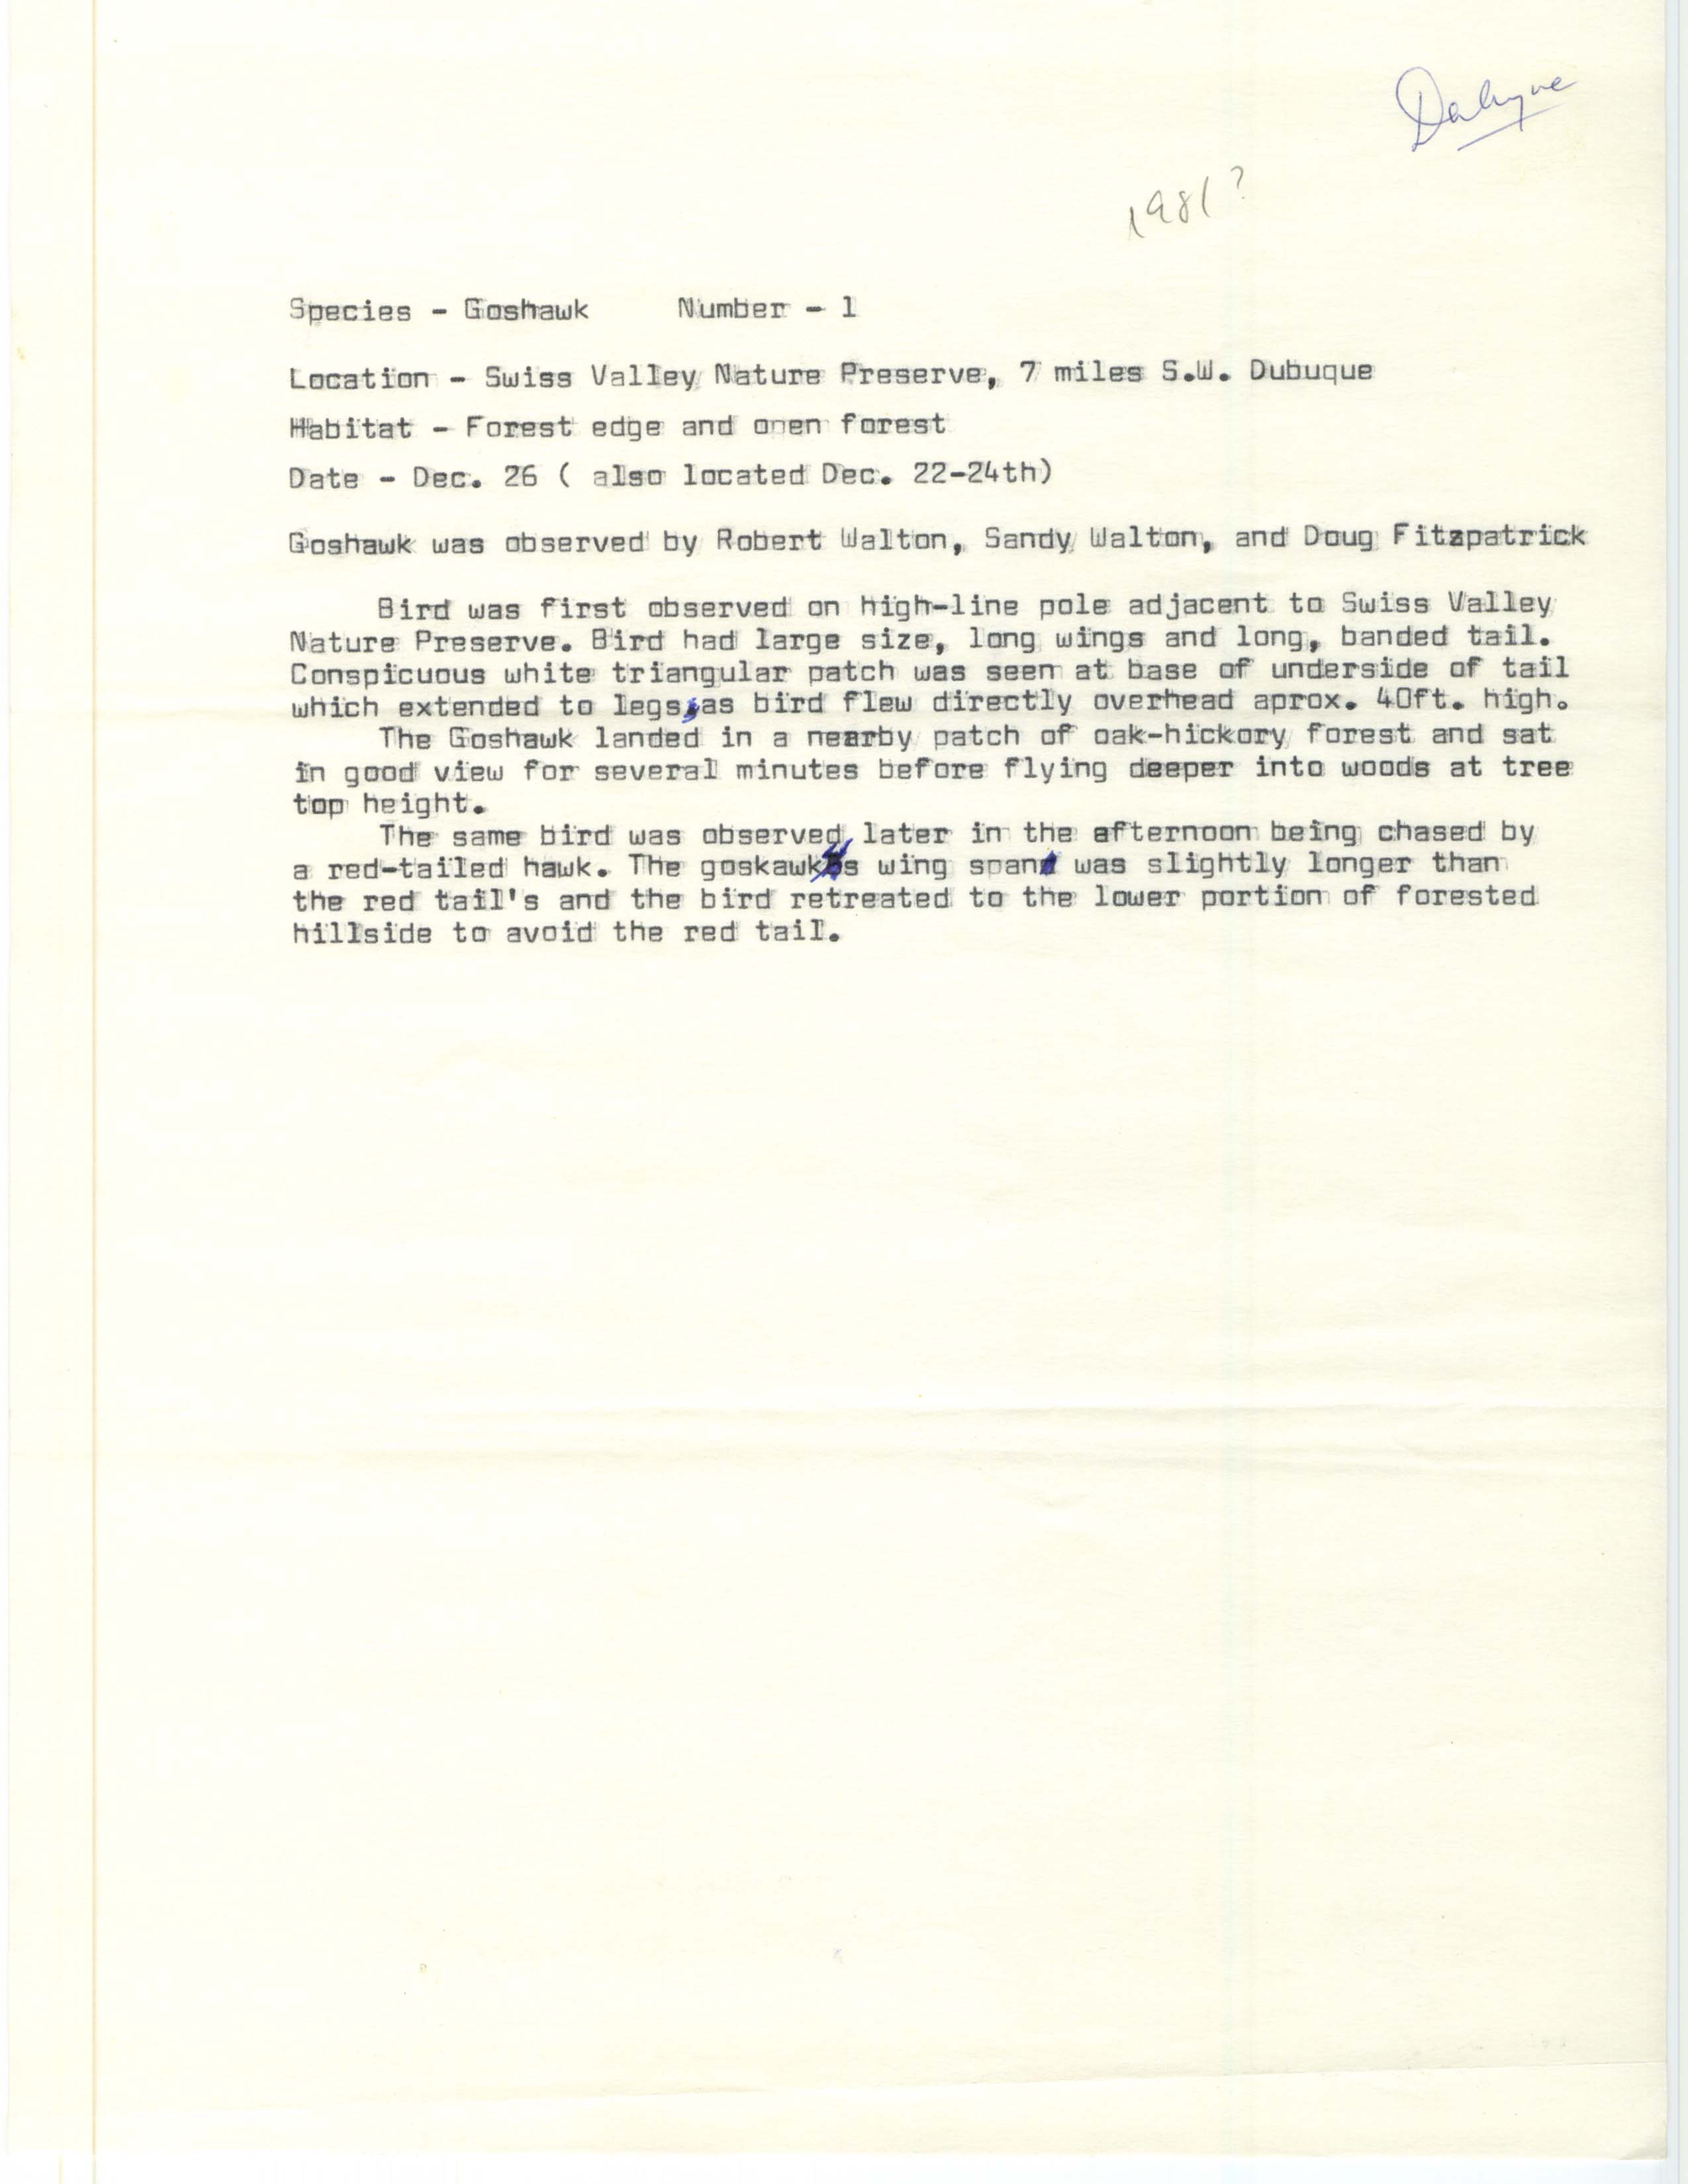 Northern Goshawk sighting details contributed by Robert Walton, 1981